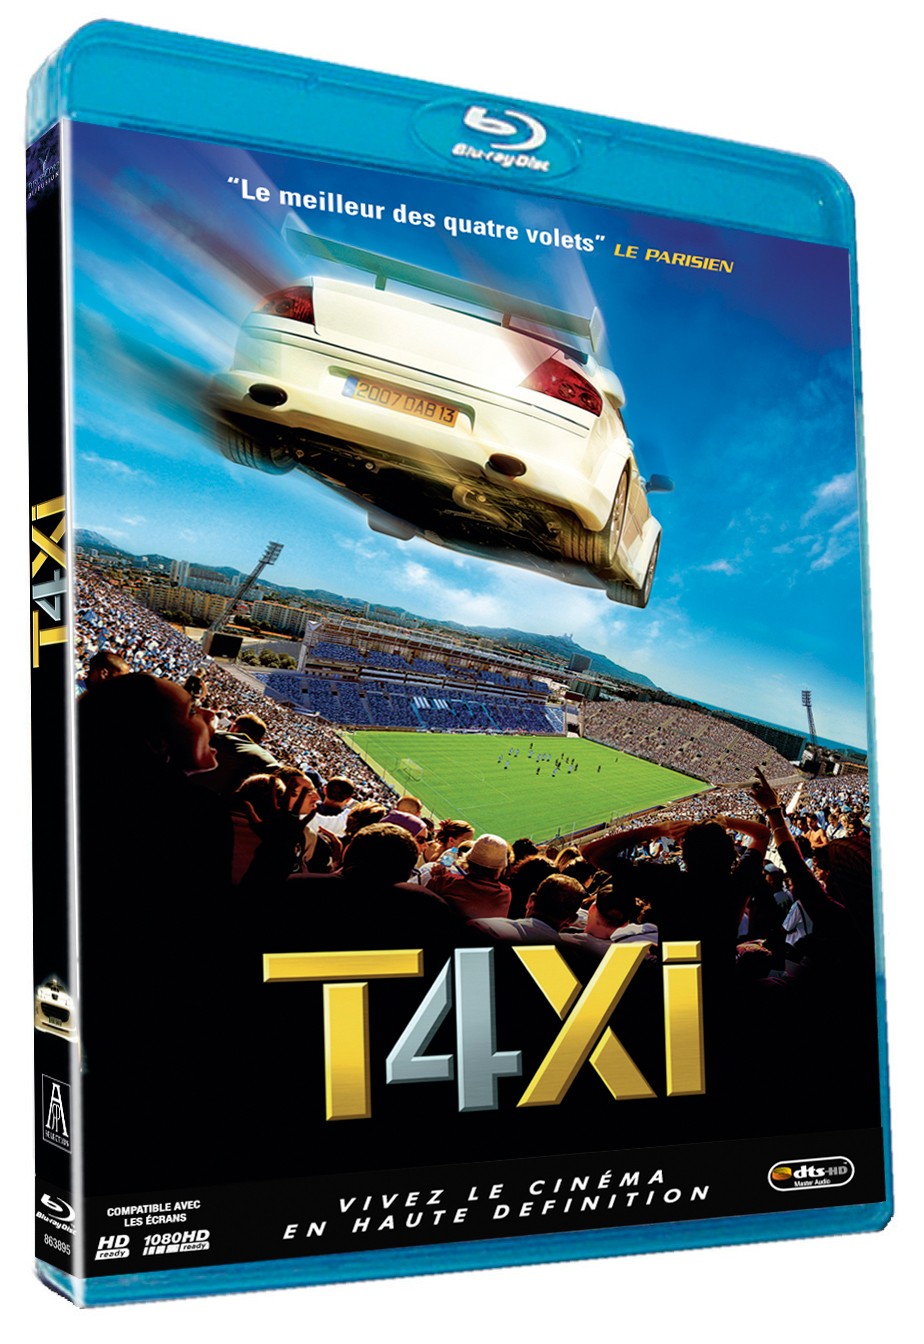 Такси 4 год выпуска. Такси 1. (1998) Blu ray. Такси 2 обложка Blu ray. Такси 4. Такси 4 DVD.